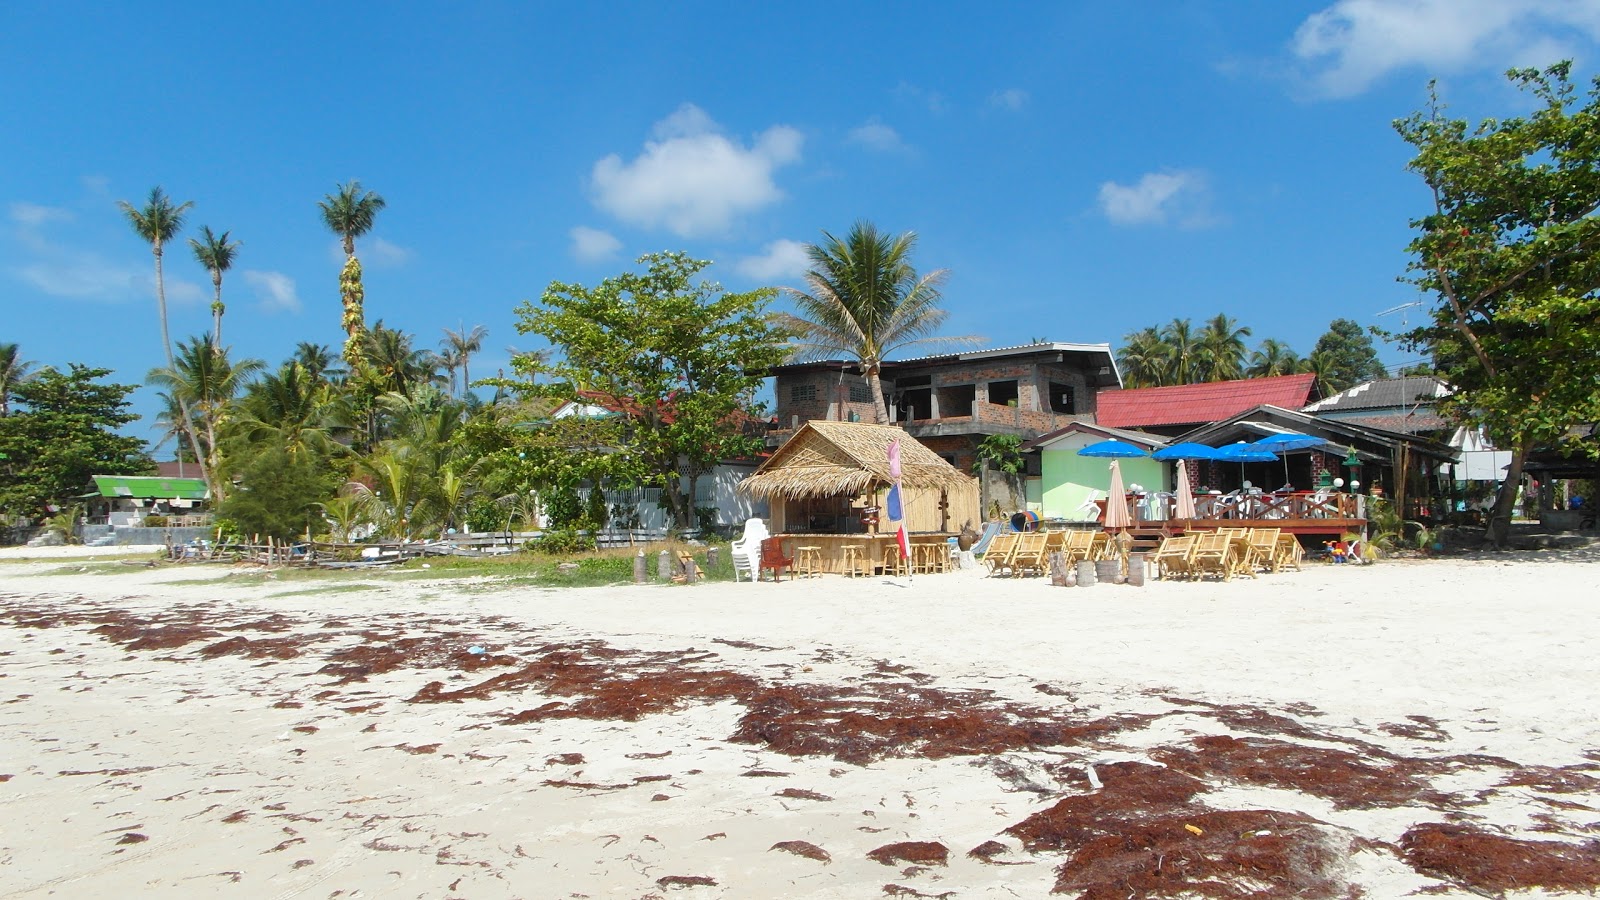 Foto de Bang Kao Beach - lugar popular entre os apreciadores de relaxamento